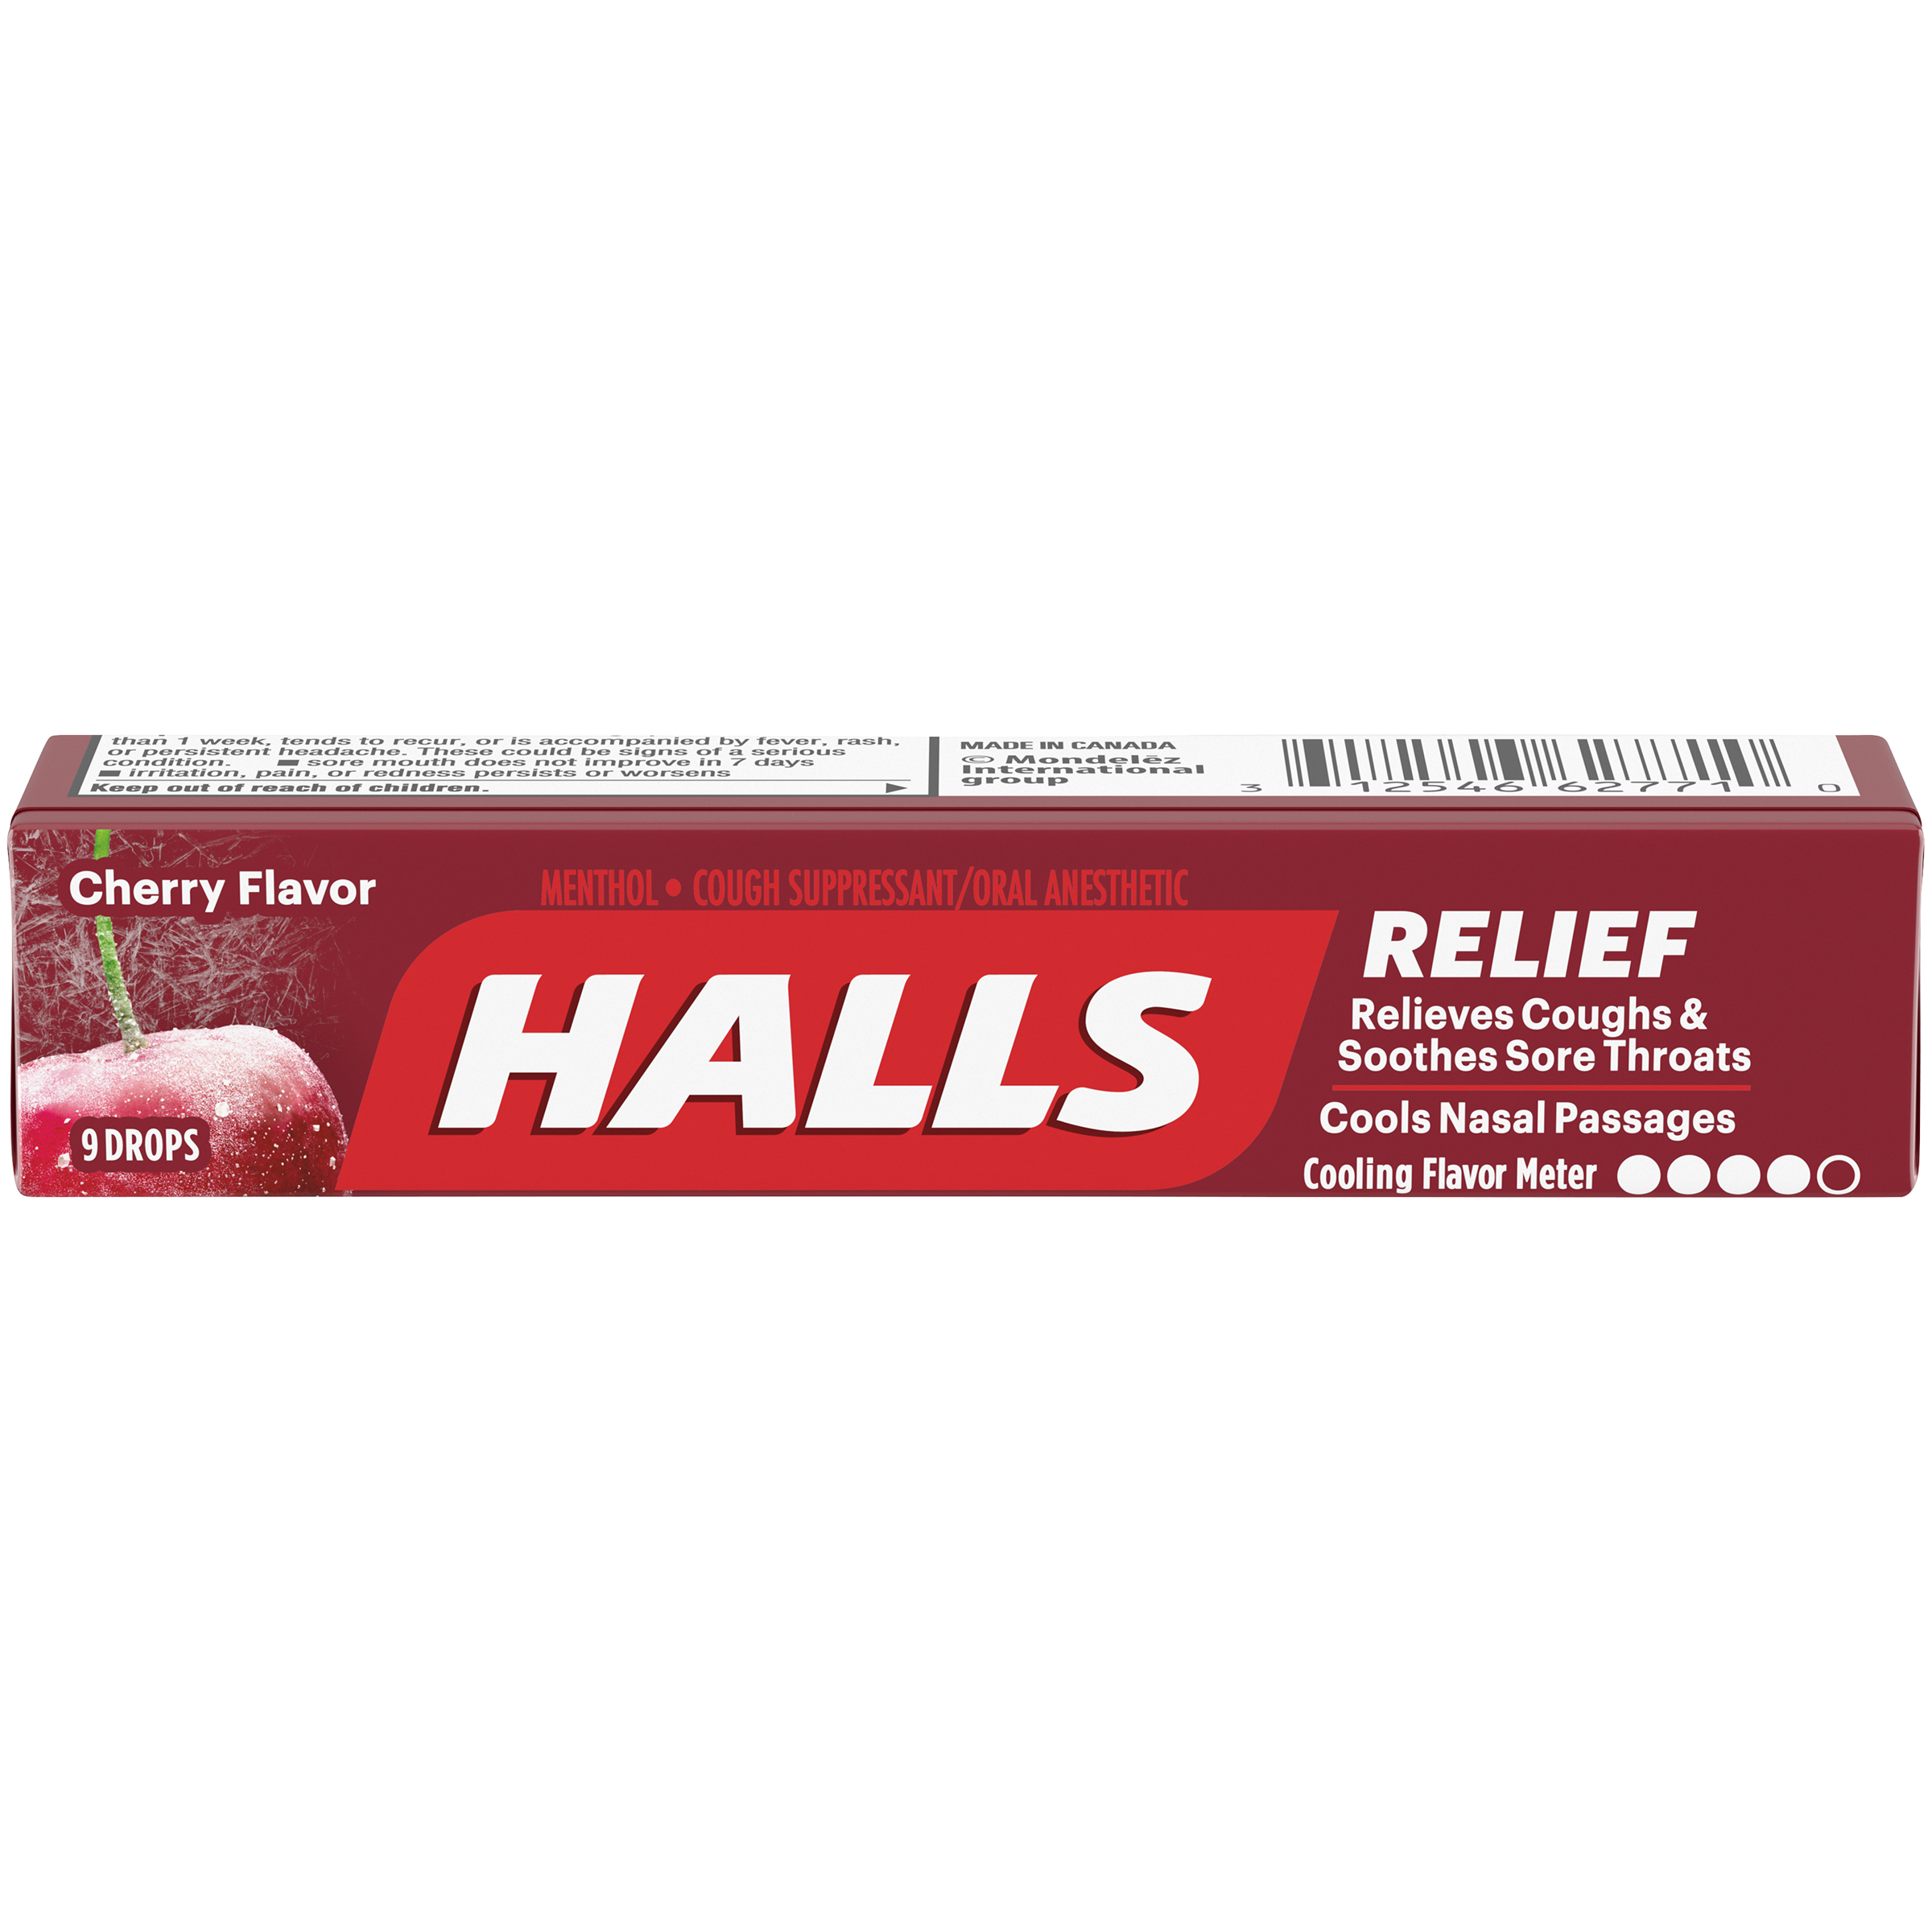 HALLS Cherry Flavor Cough Drops Stick 24x20